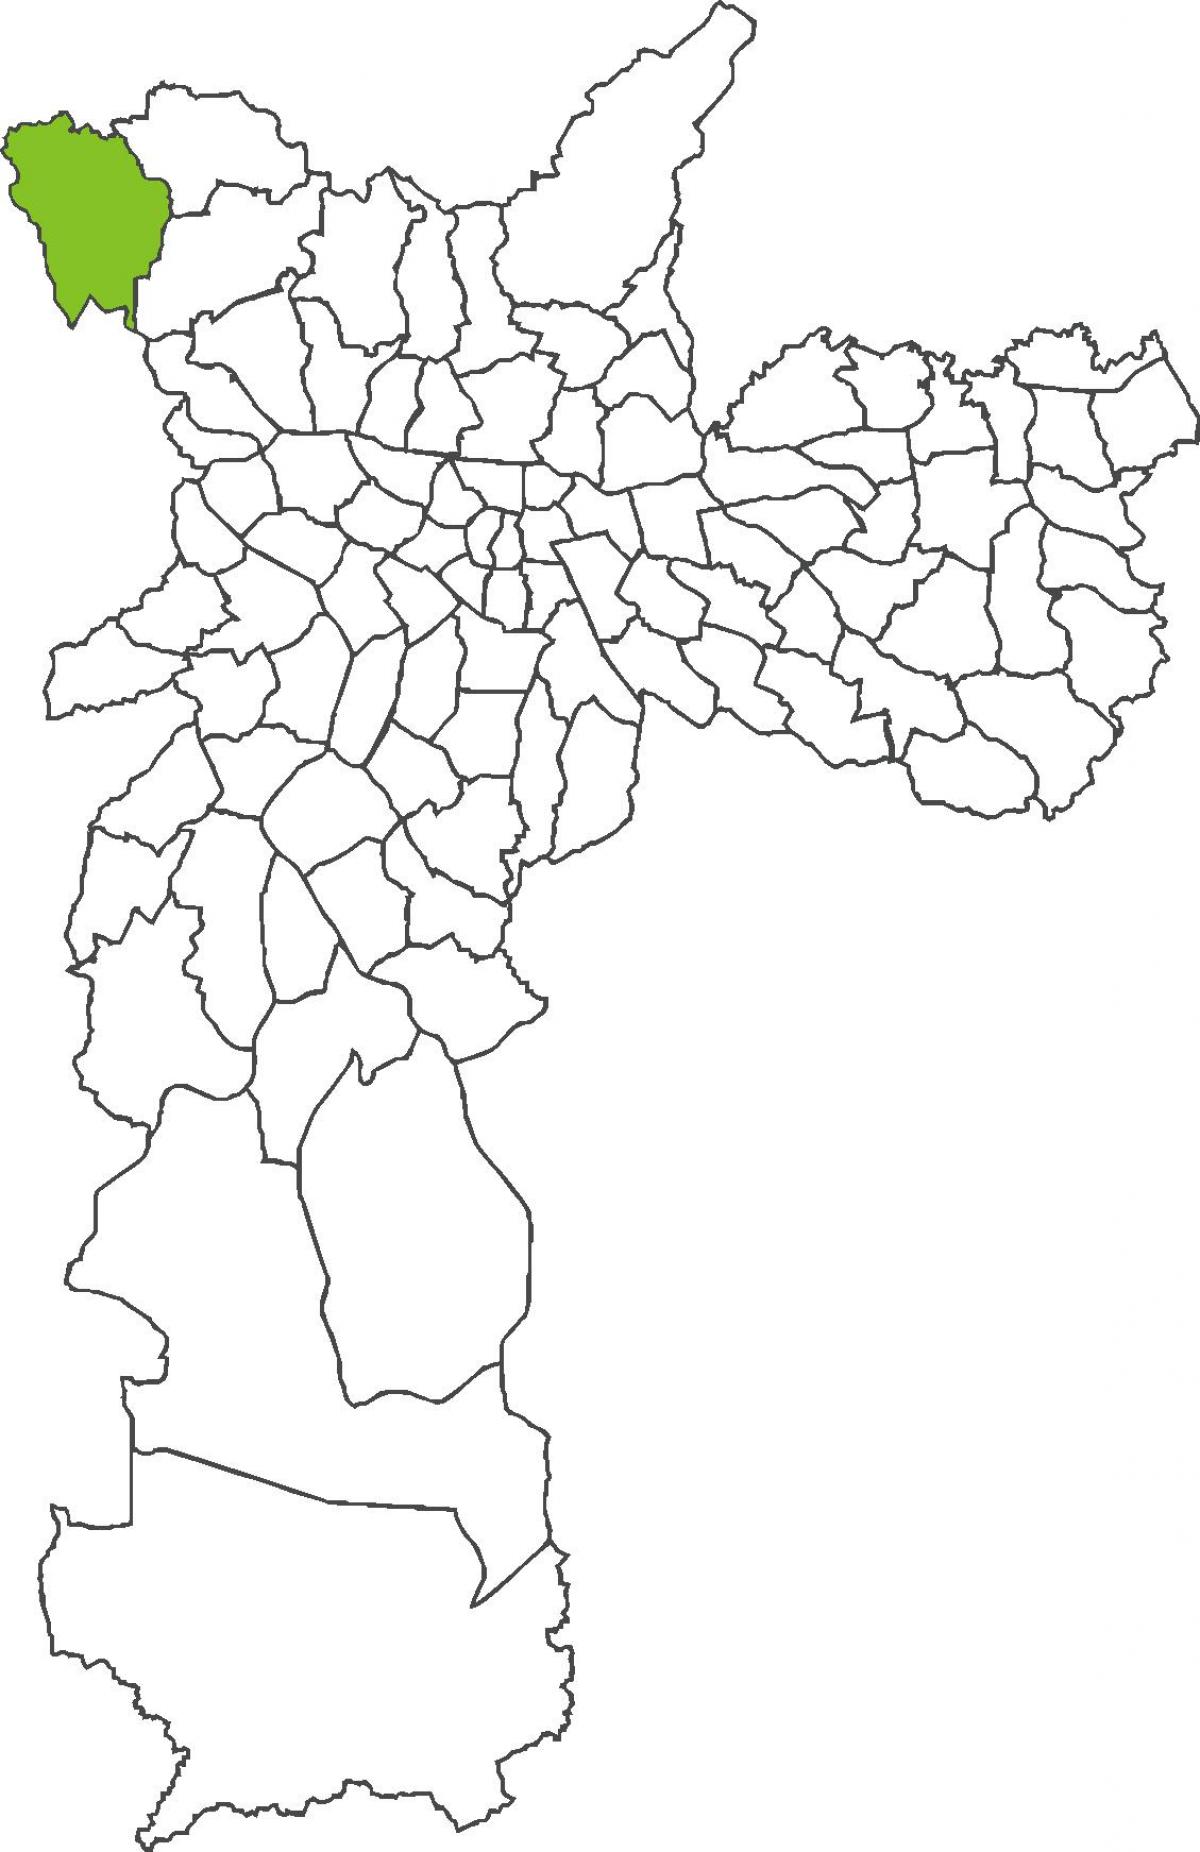 Карта раён Anhangüera